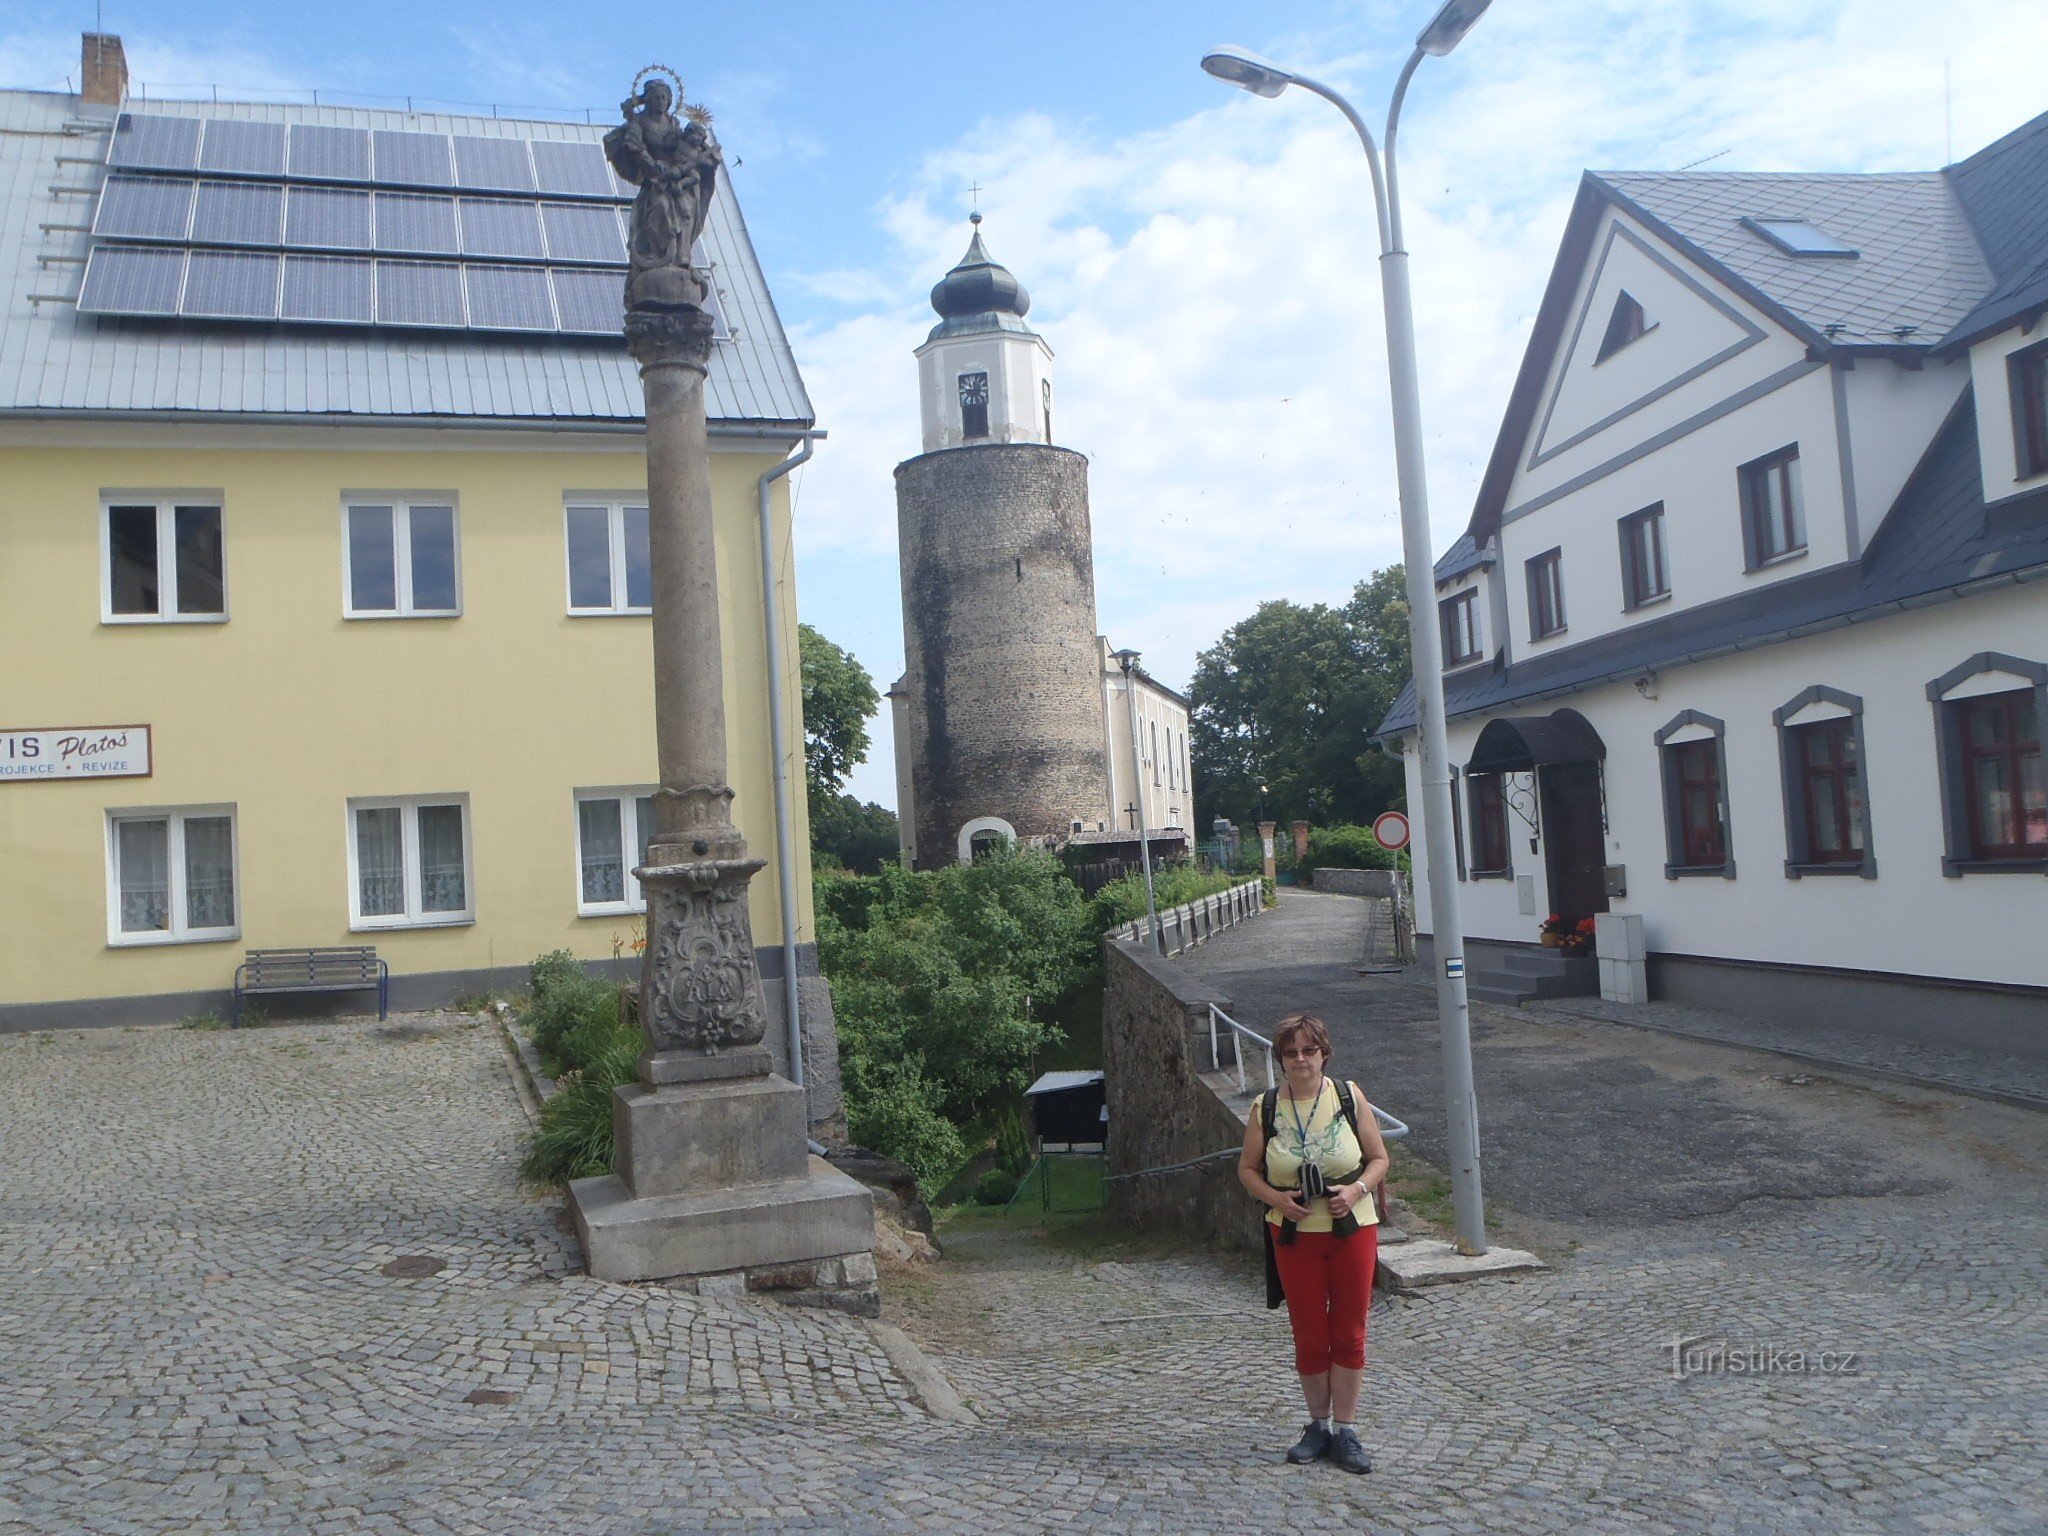 Su Máměstí, dietro la torre del castello di Frýdberk